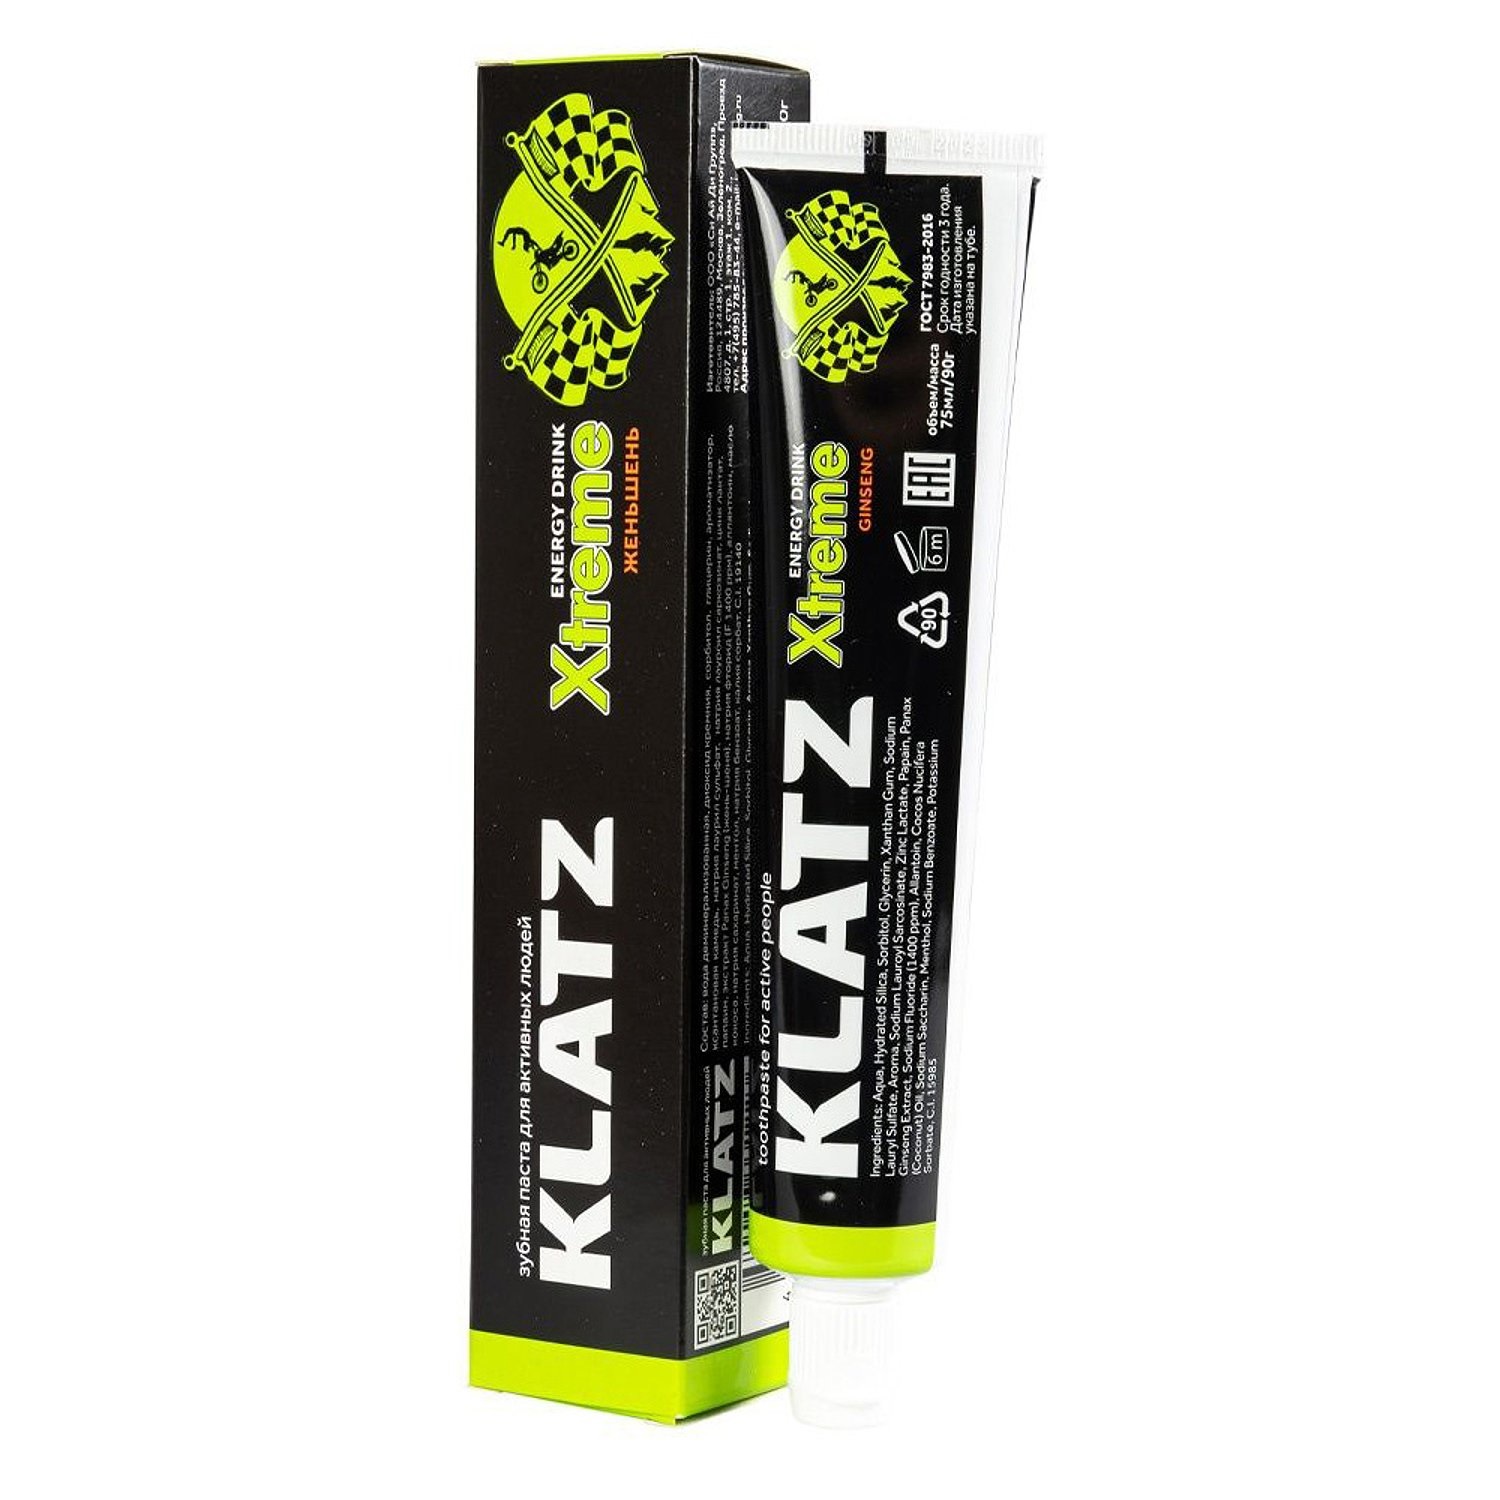 Зубная паста KLATZ X-treme Energy Drink для активных людей, женьшень, 75 мл паста зубная klatz x treme energy drink для активных людей гуарана 75 мл